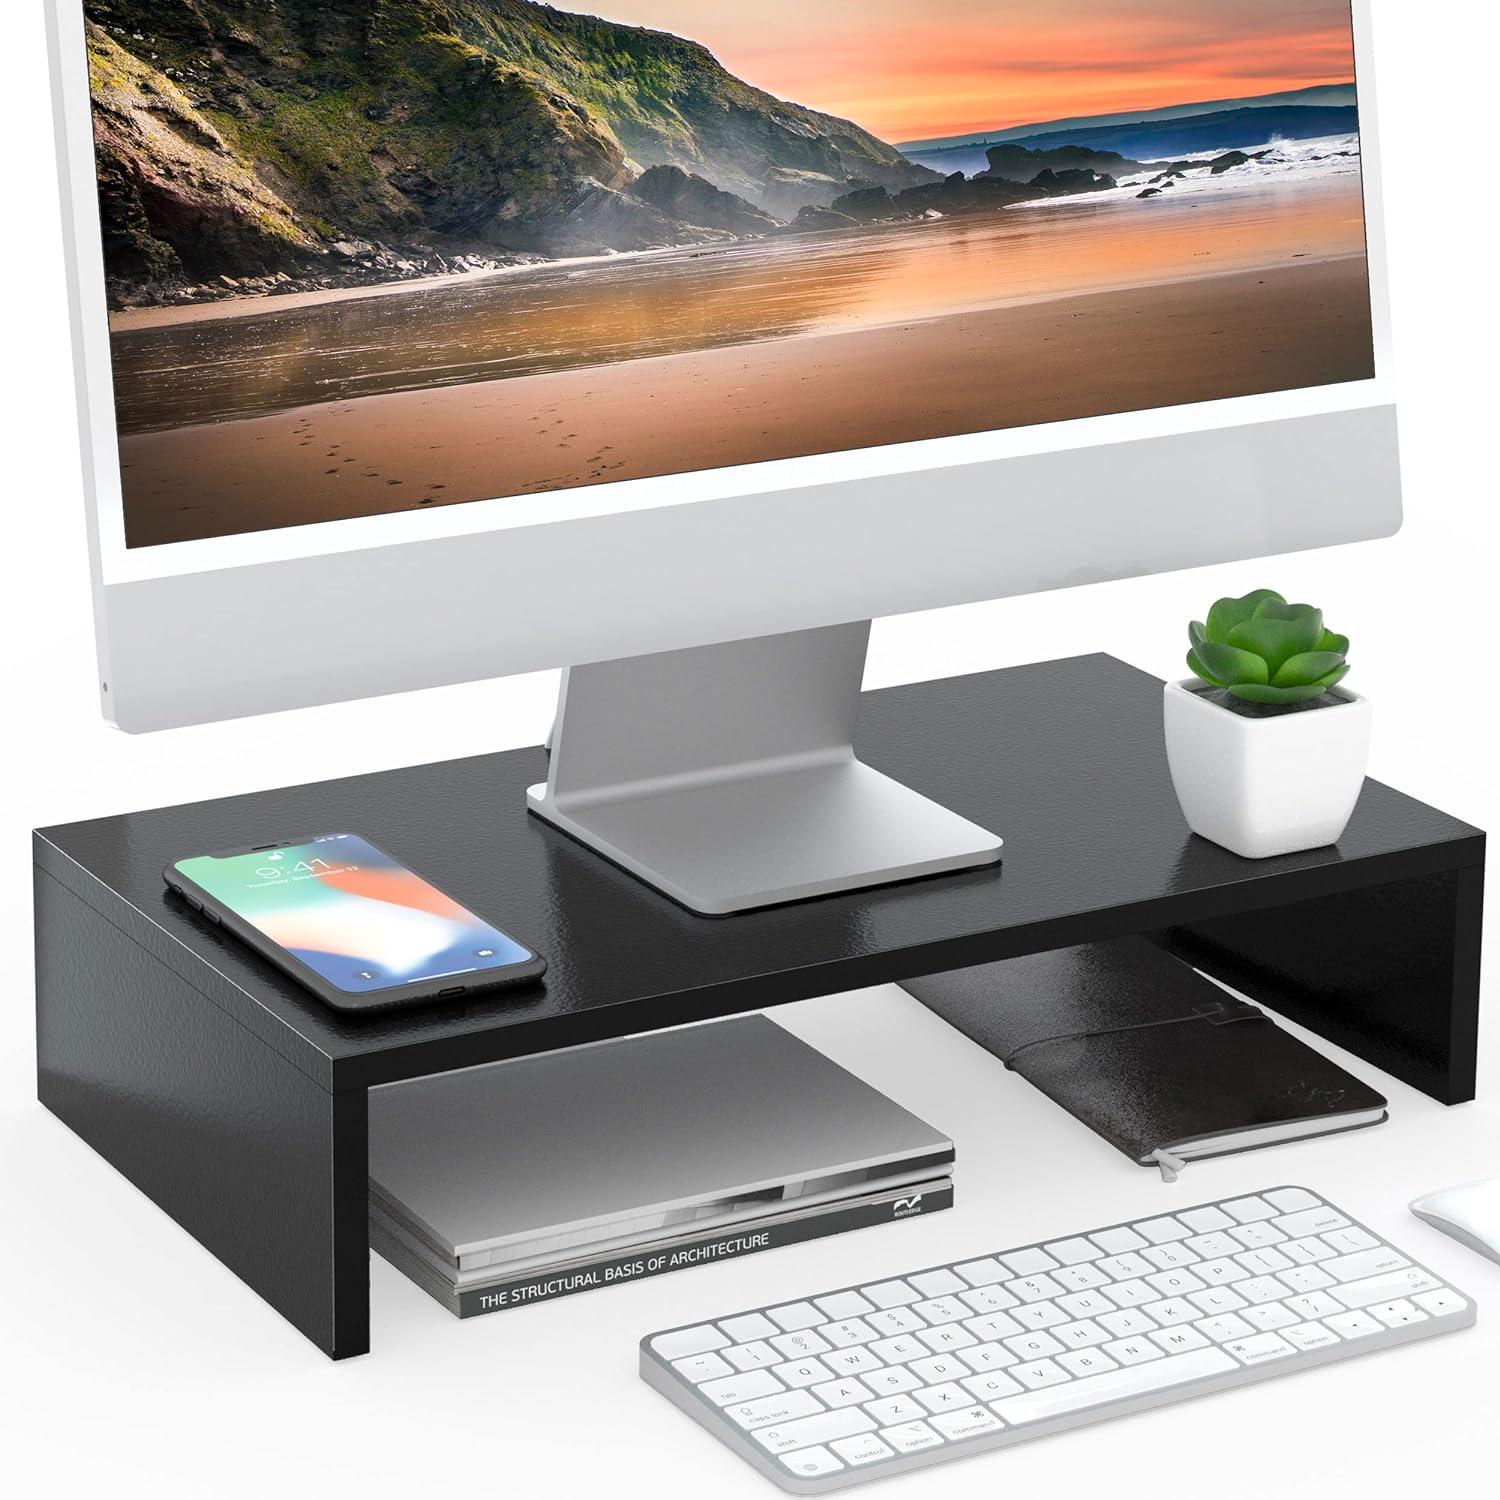 fitueyes computer monitor riser 16 7 inch laptop stand save space desk organizer with keyboard organizer